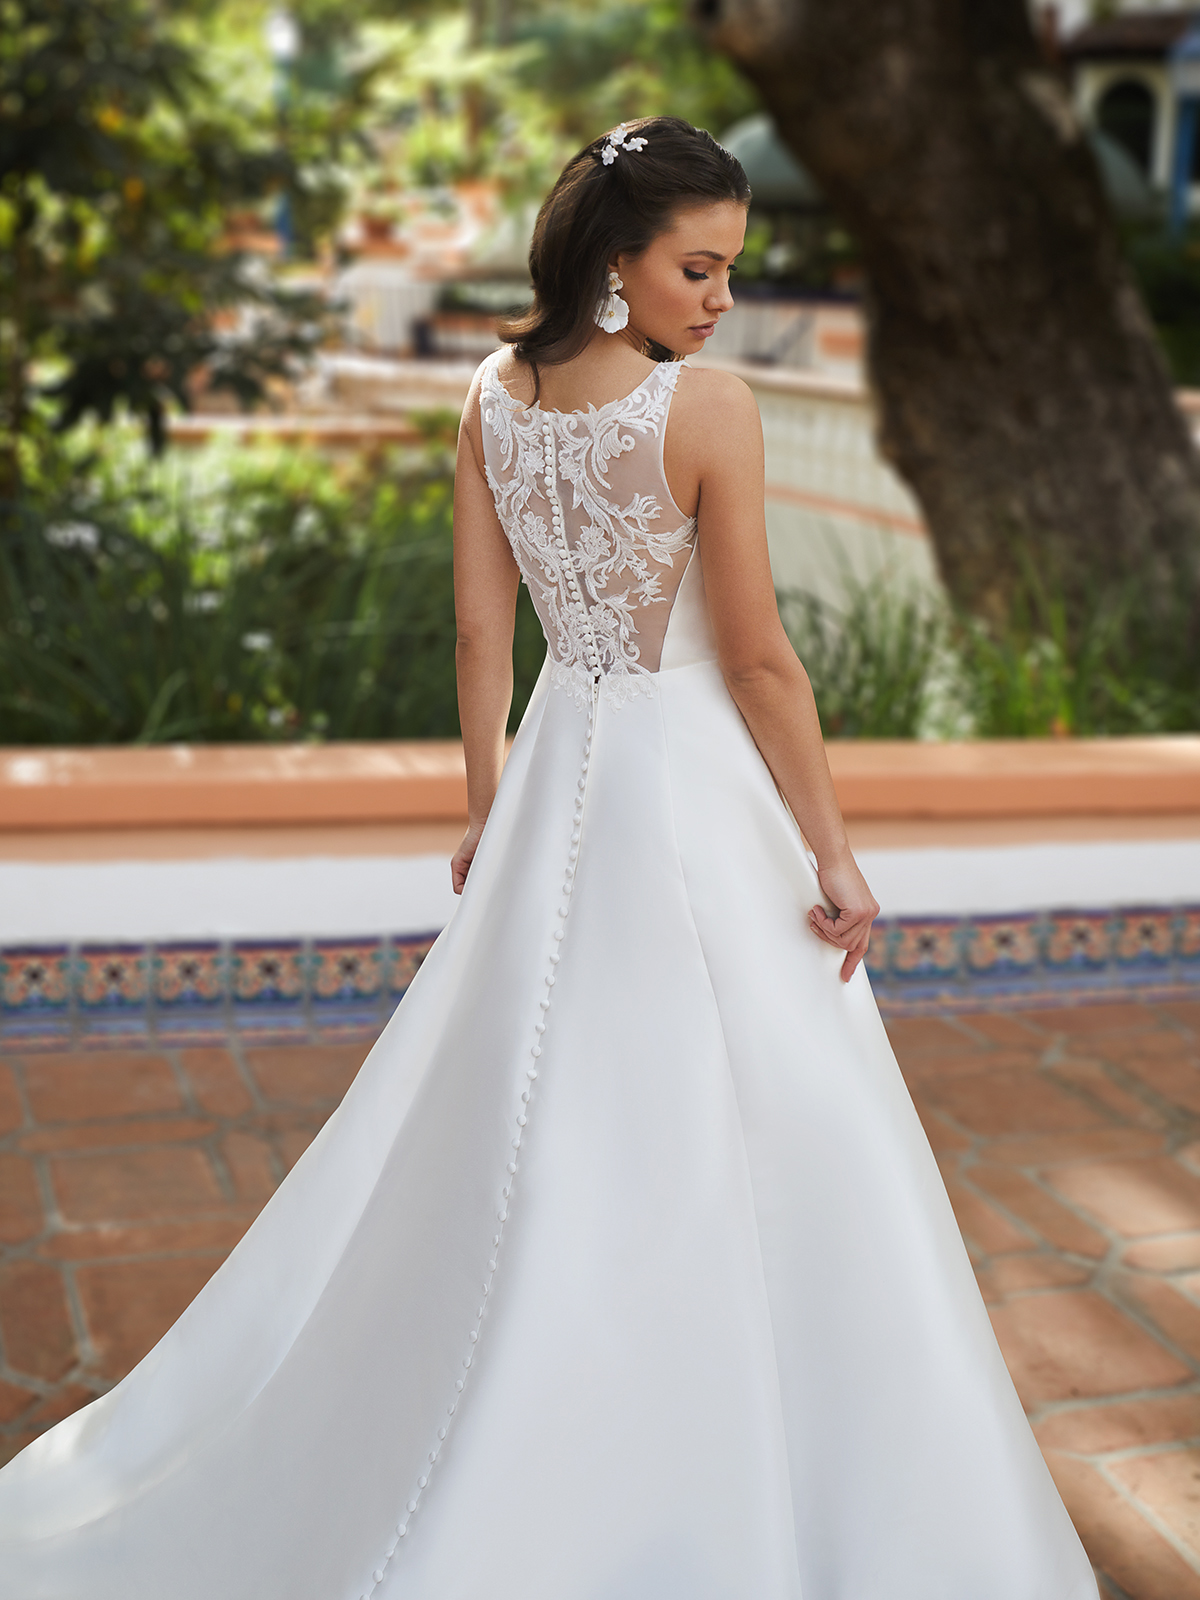 Breathtaking wedding dress with graceful elegance  Wedding dresses lace,  Dream wedding dresses, Beautiful wedding dresses